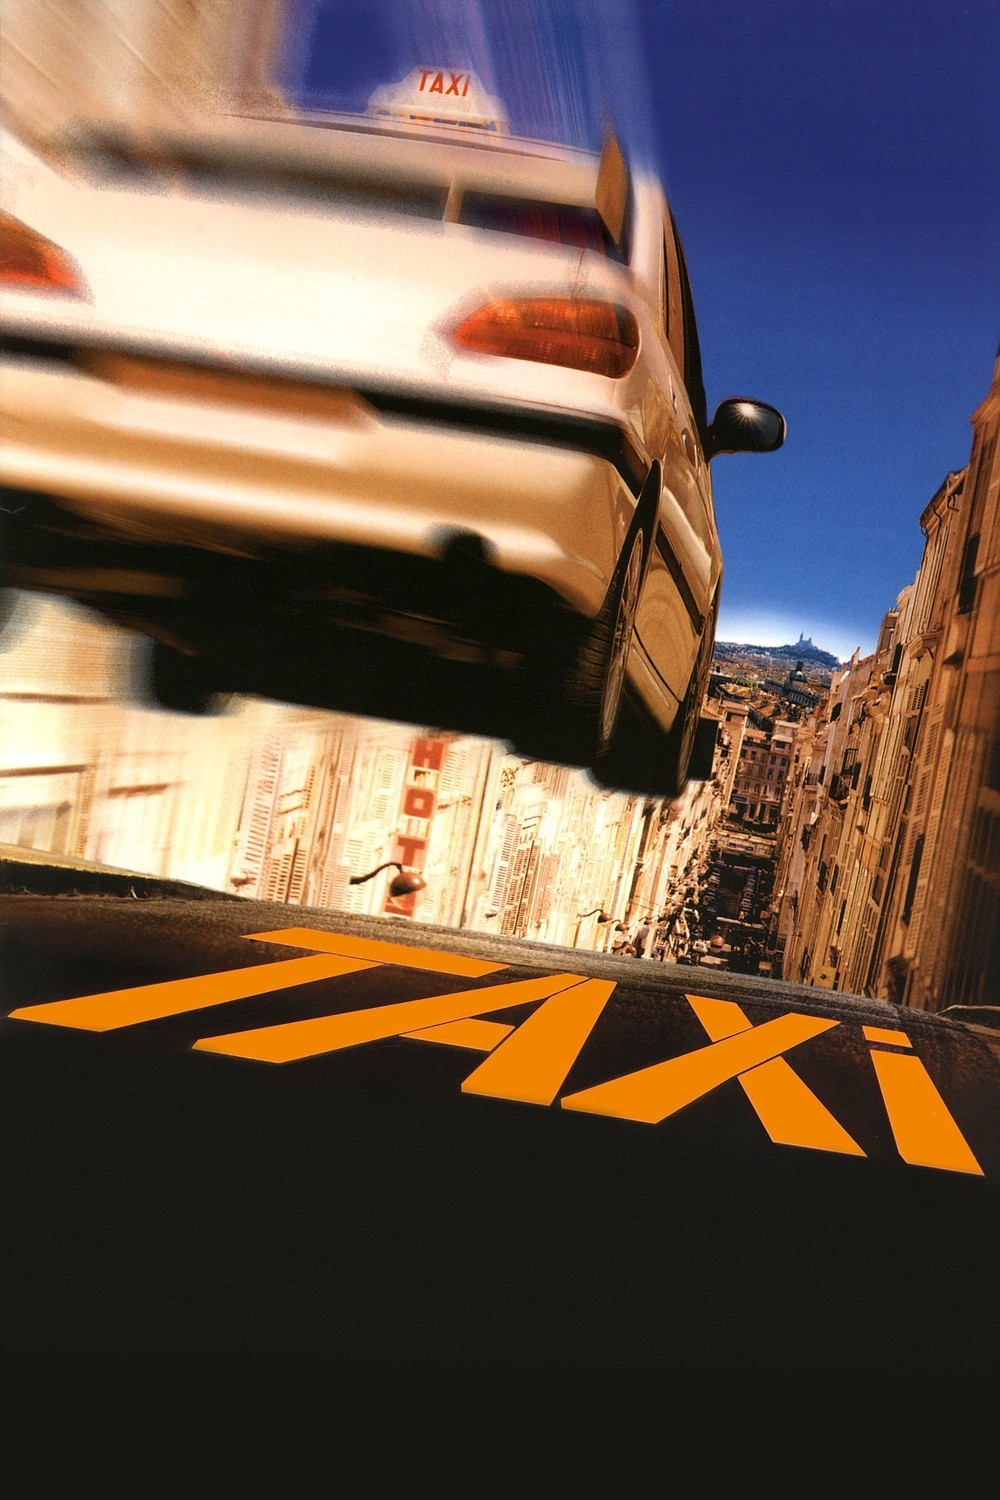 Taksi 1 – Taxi 1